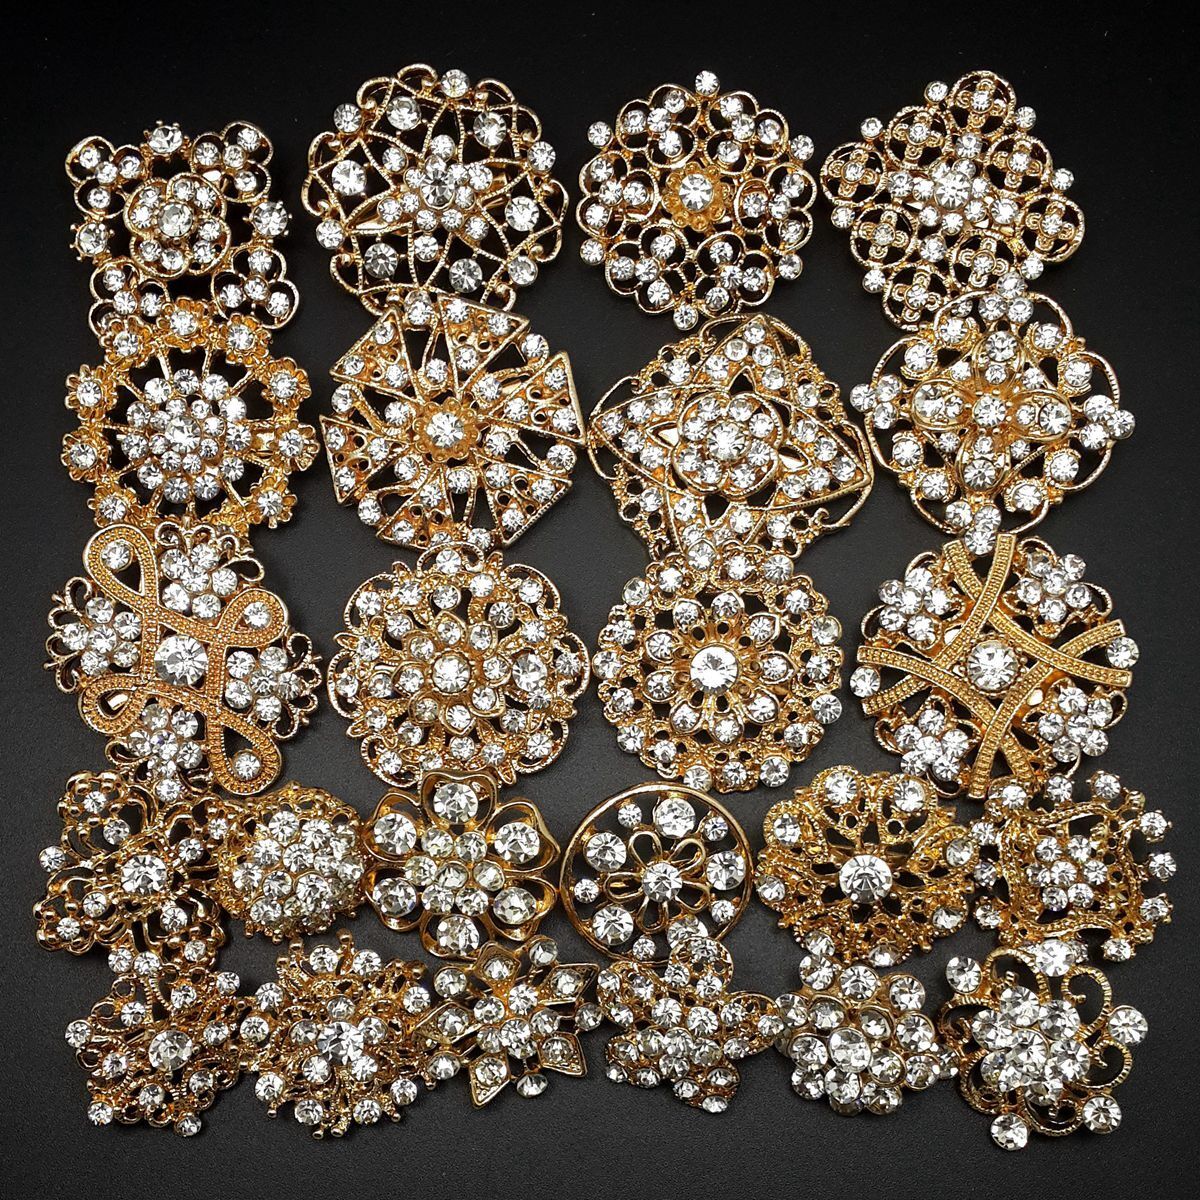 MEEJOA 24pc Mixed Alloy Gold Rhinestone Crystal Brooches Pin DIY Wedding Bouquet